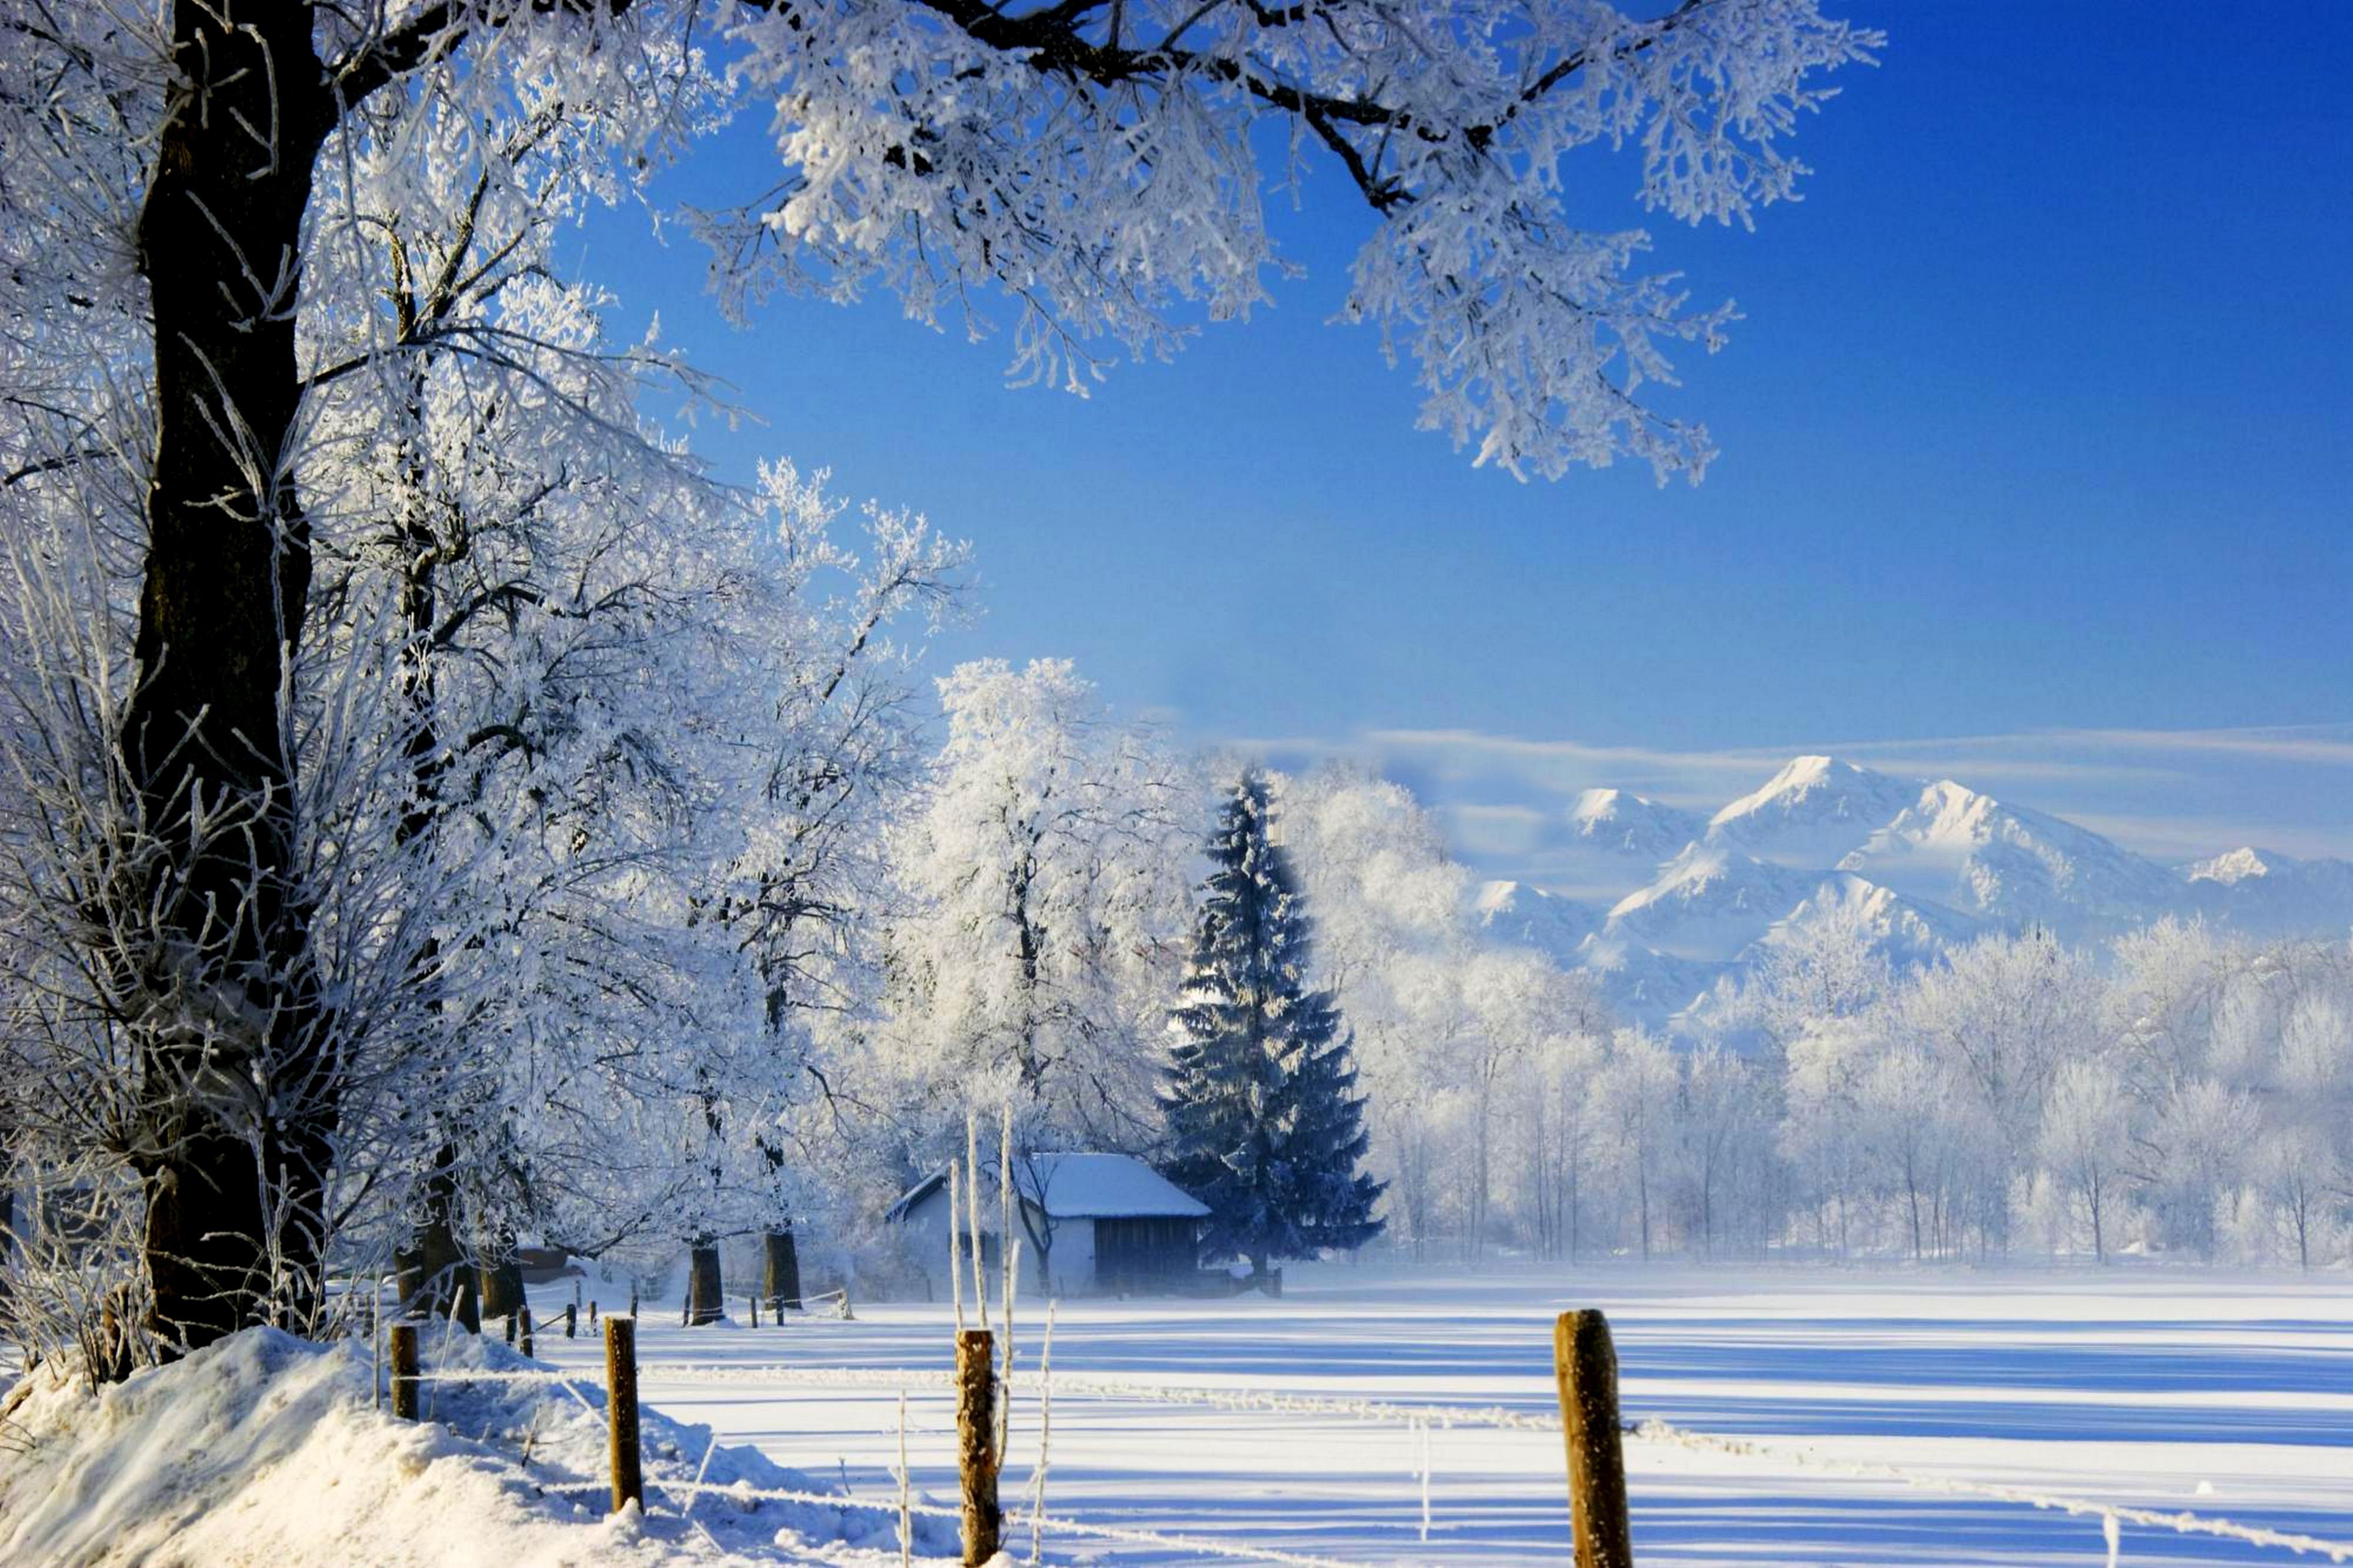 Картинка зимний период. Зимний пейзаж. Зимняя природа. Красивая зима. Снежный пейзаж.